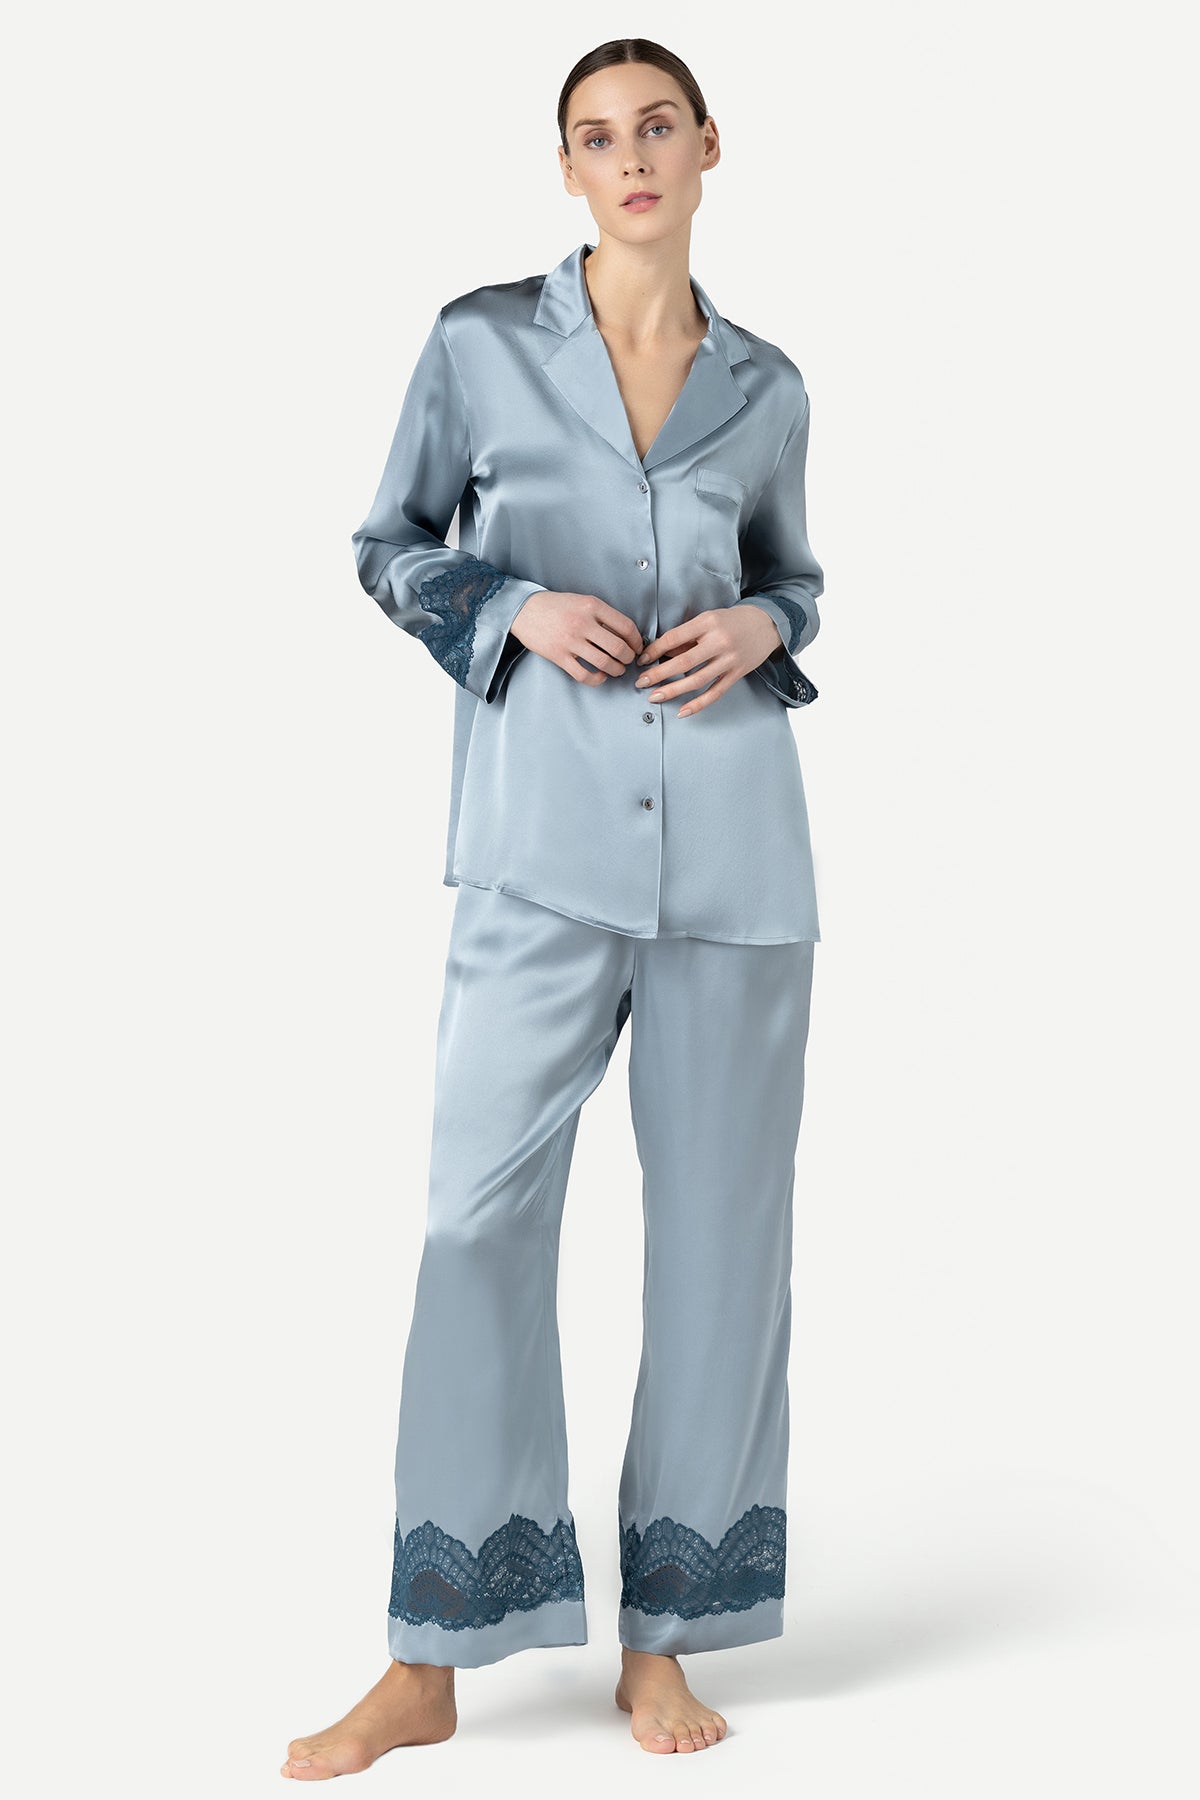 MYK Silk Women's Pajama Set with Contrast Piping